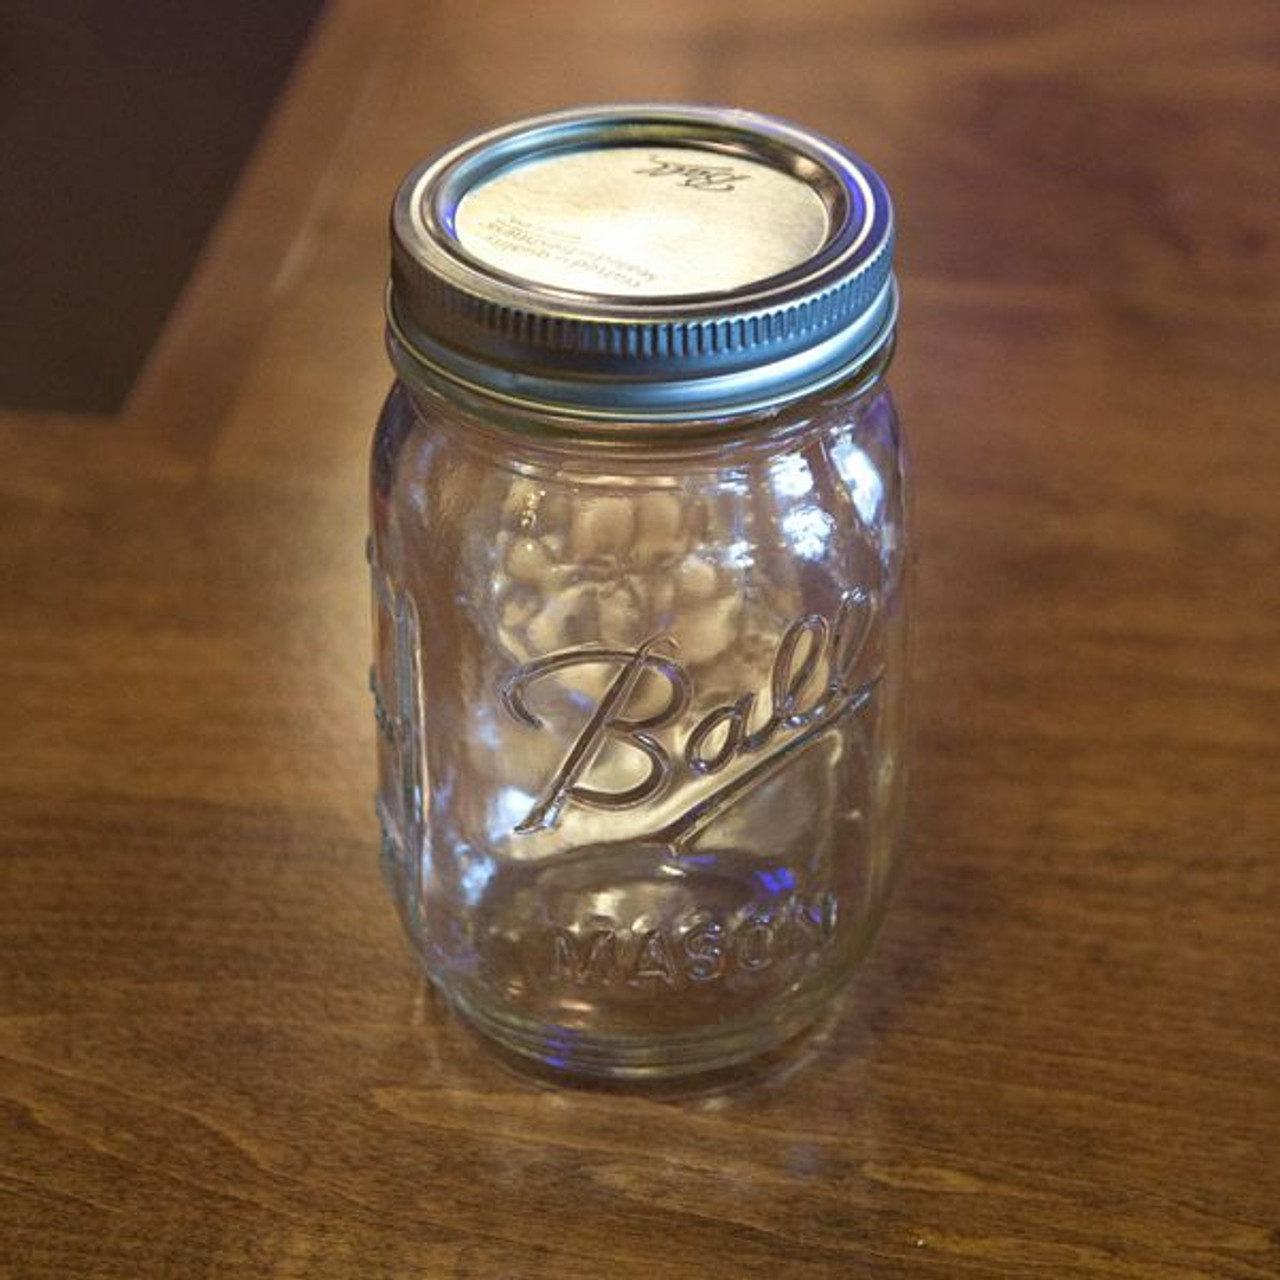 Ball Pint 16 oz. Glass Drinking Mason Jars 4 count